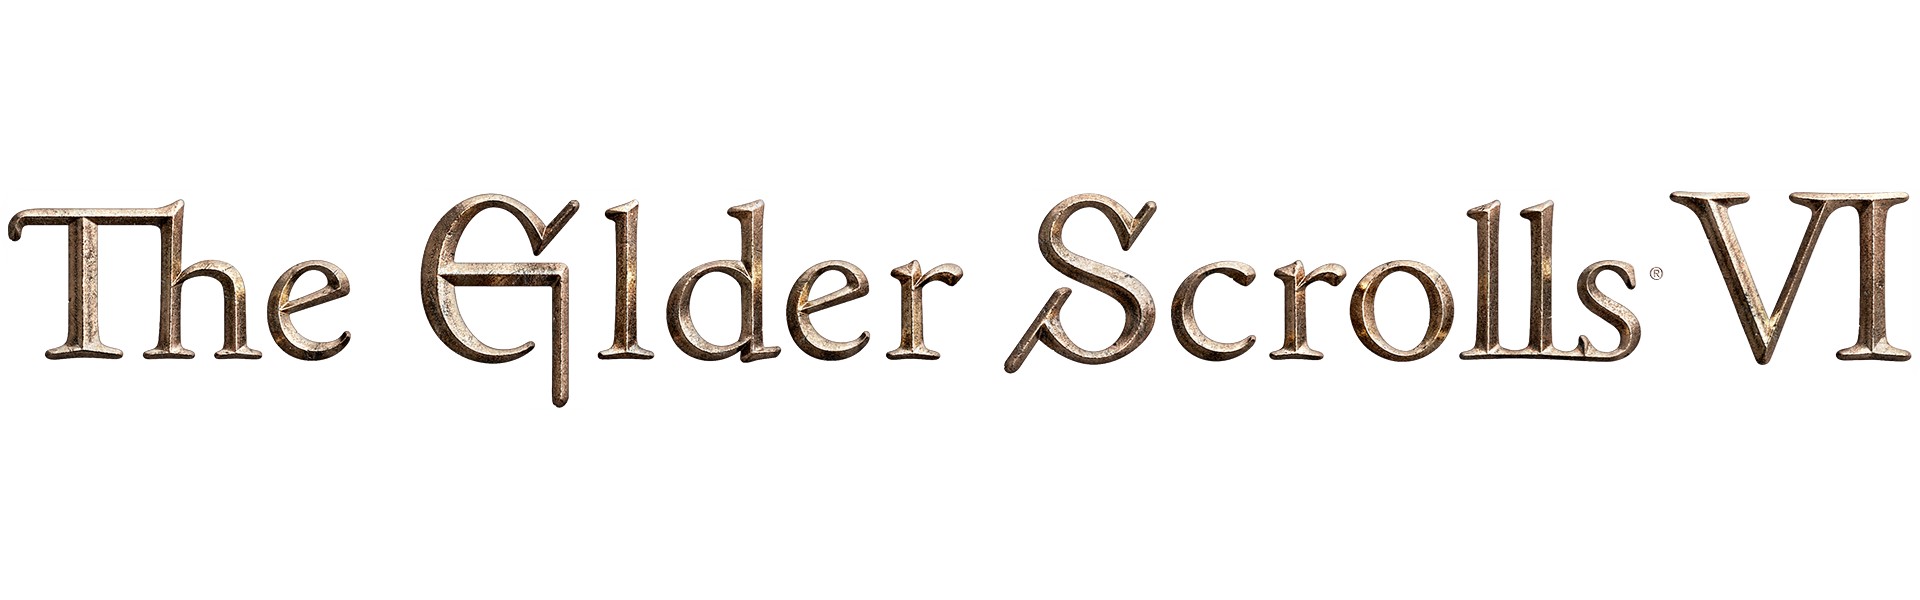 The Elder Scrolls Home